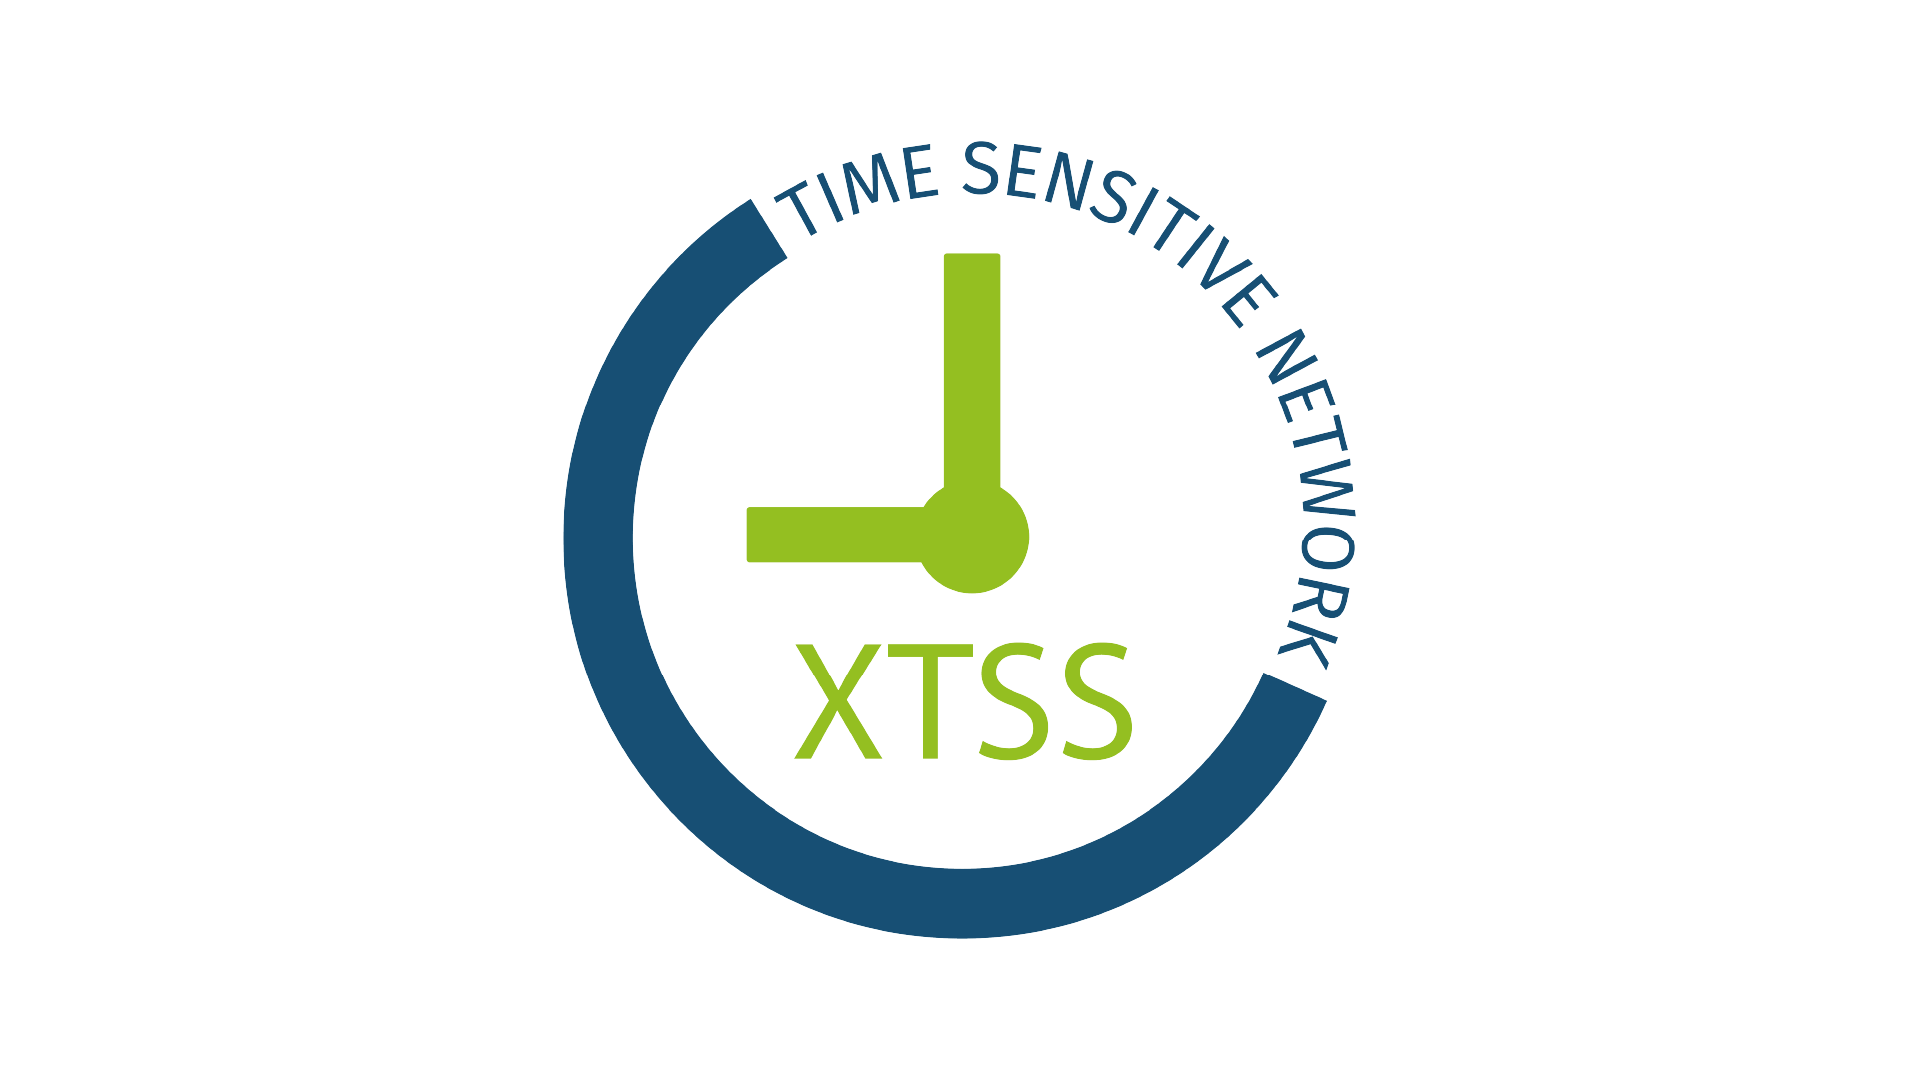 XTSS Time Synchronization Service